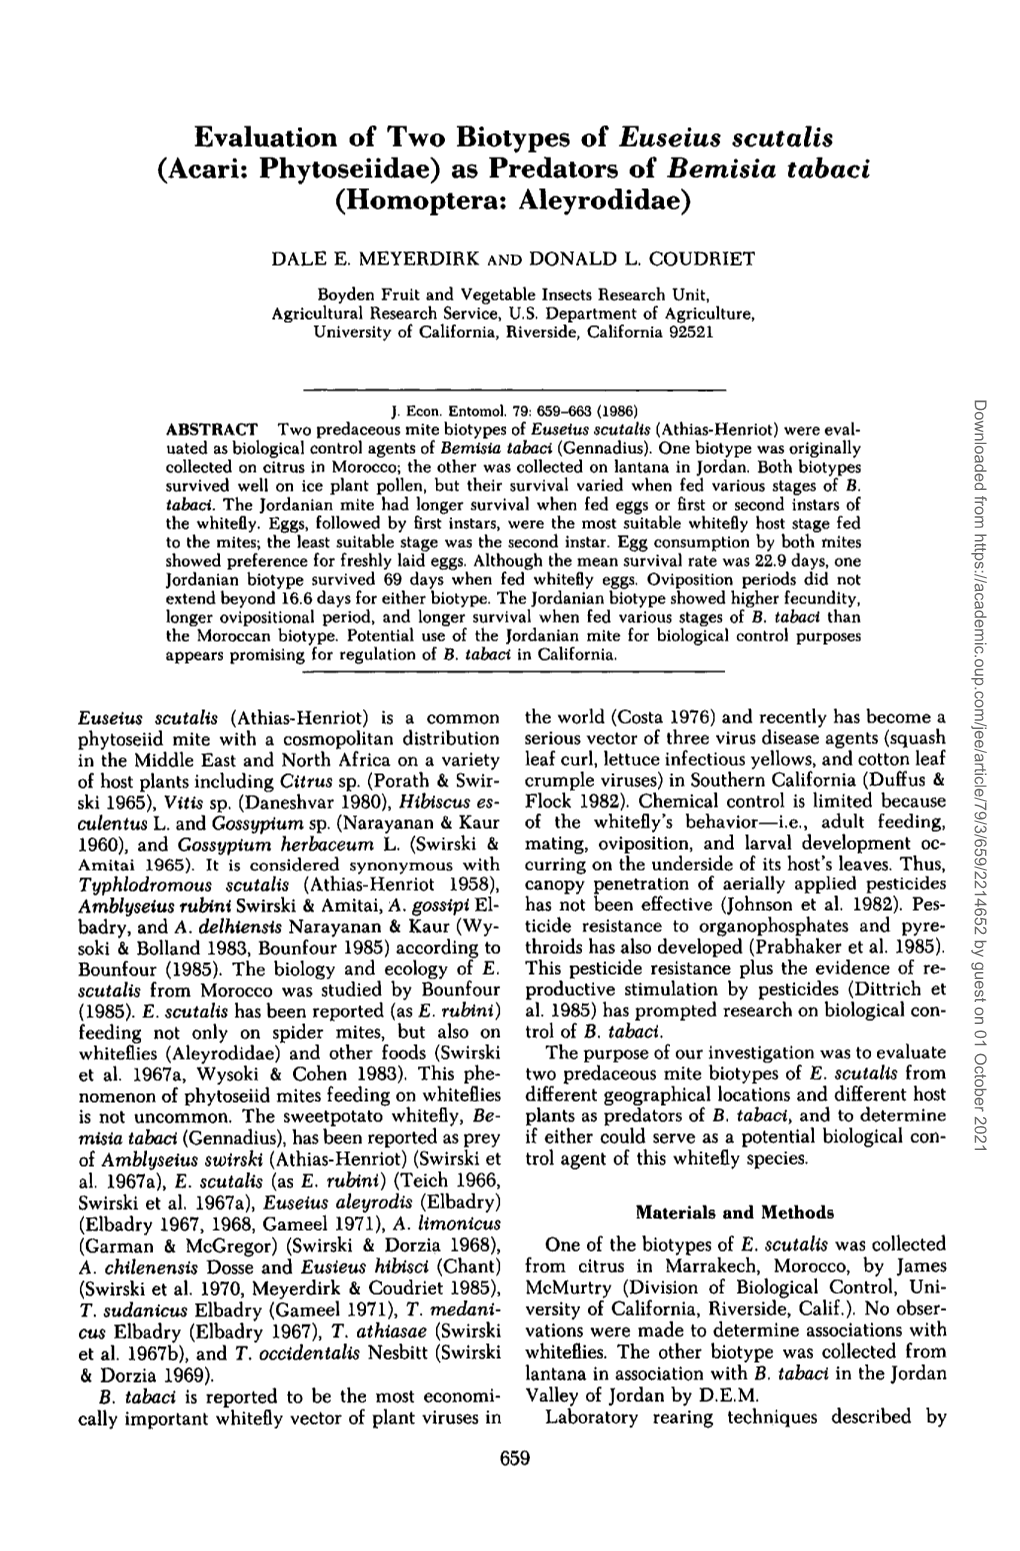 Evaluation of Two Biotypes of Euseius Scutalis (Acari: Phytoseiidae) As Predators of Bemisia Tabaci (Homoptera: Aleyrodidae)